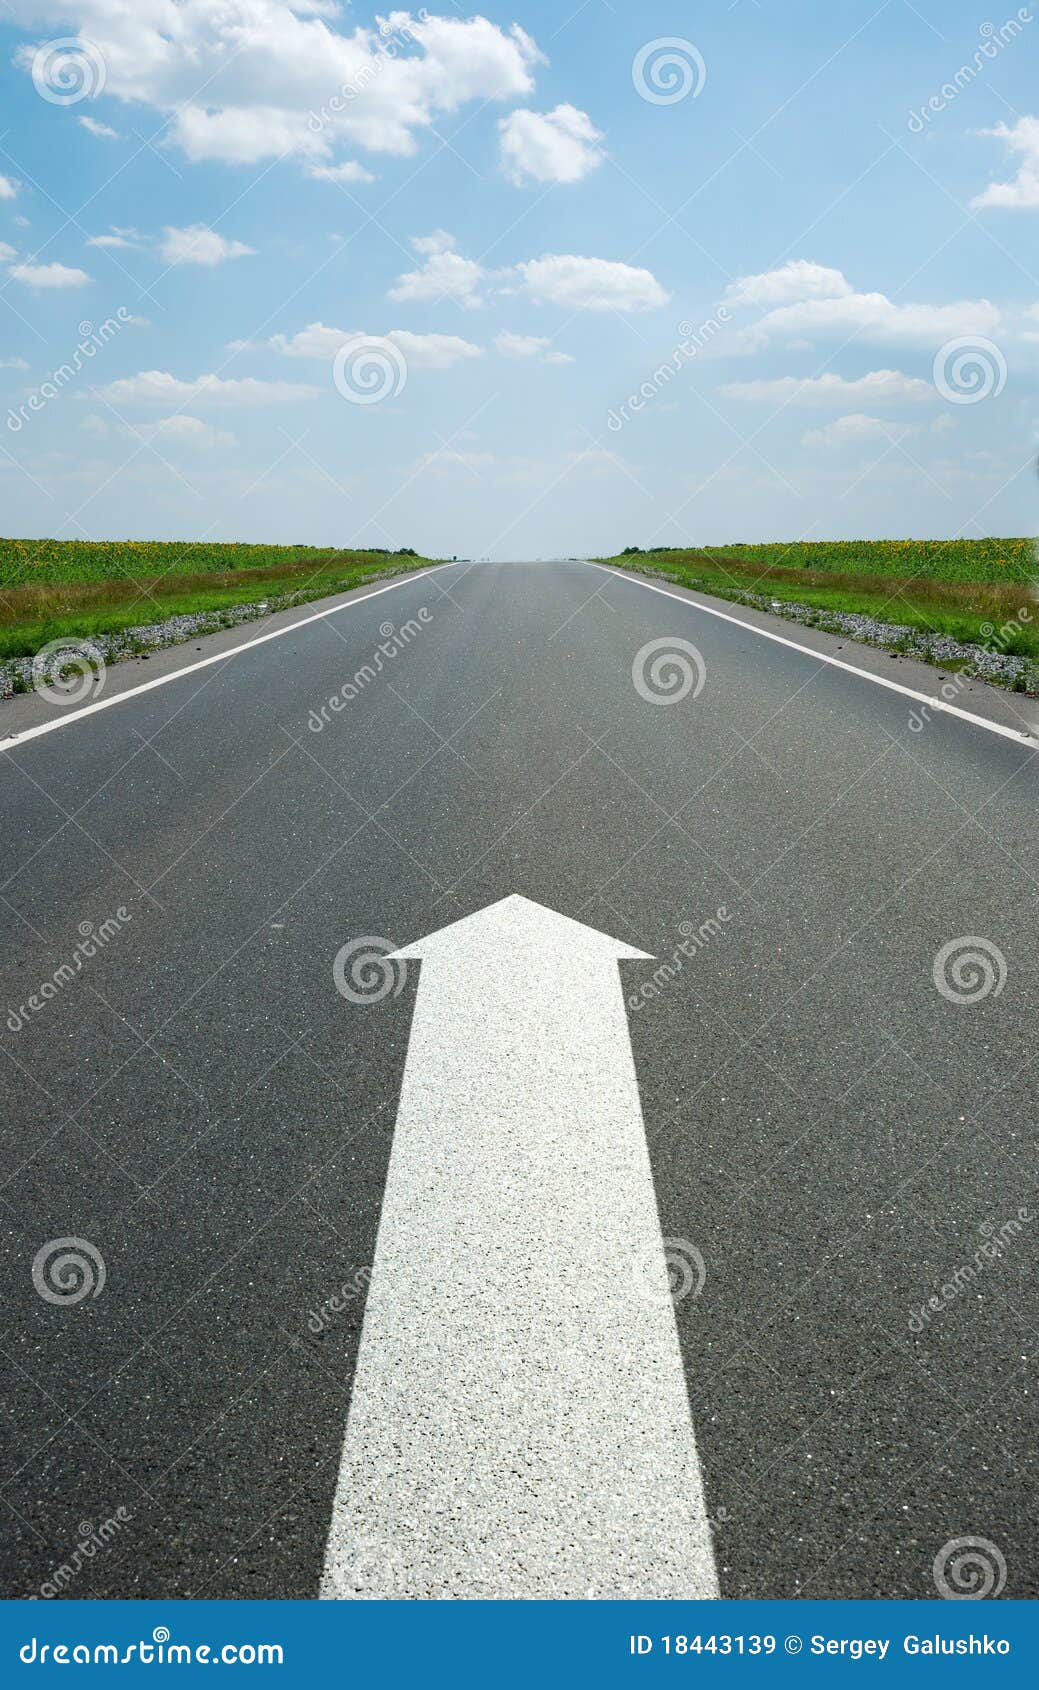 road marking arrow